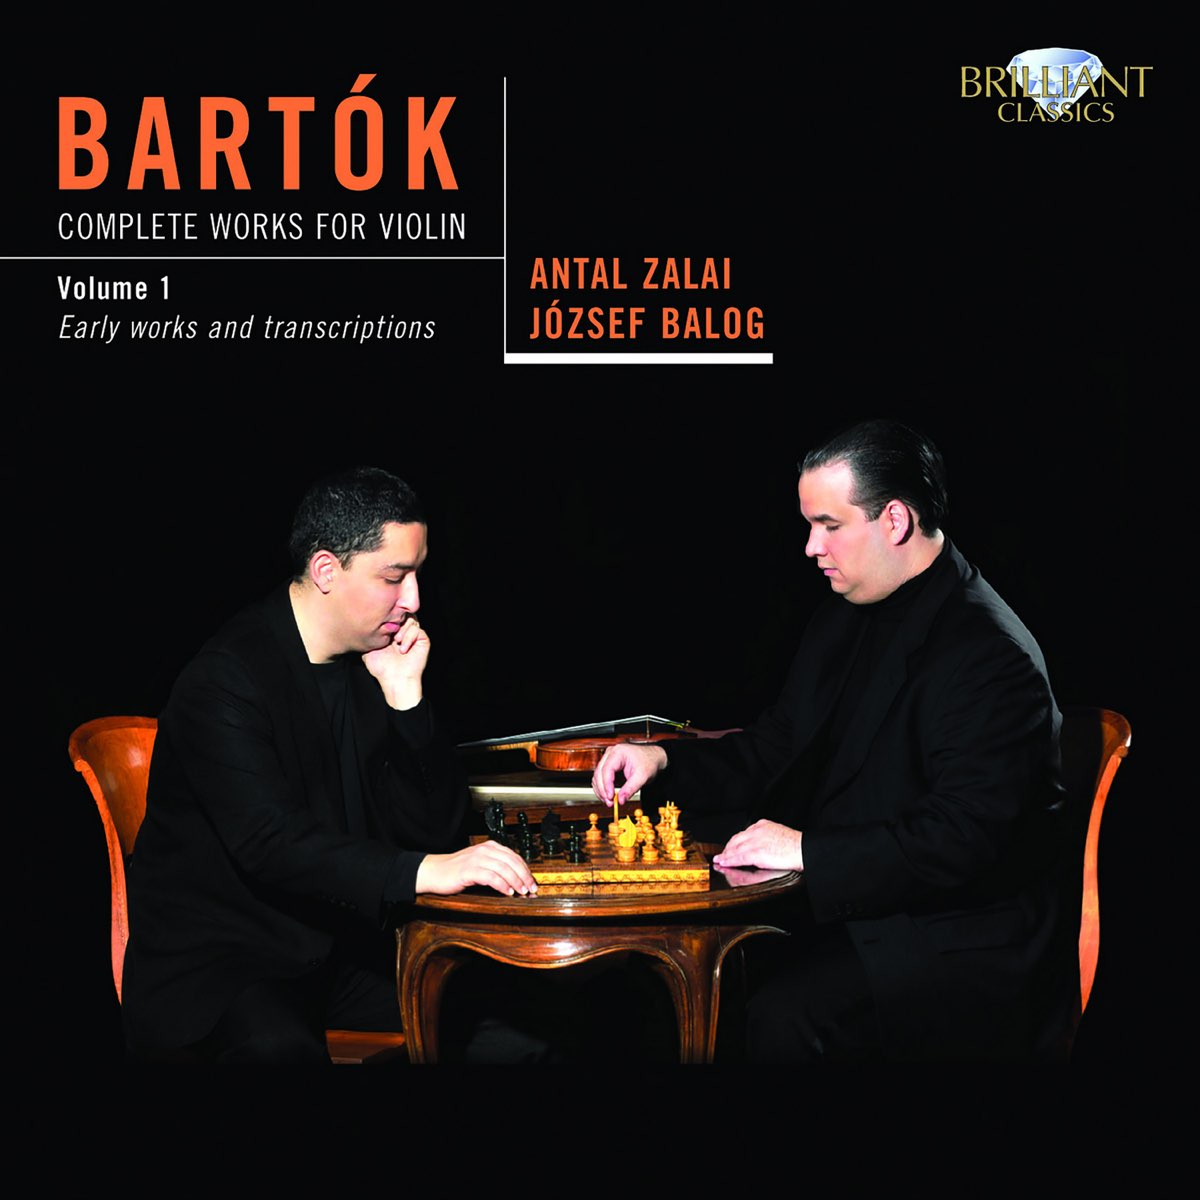 Bartok: Complete Works for Violin, Vol. 1 by Antal Zalai & József Balog on  Apple Music